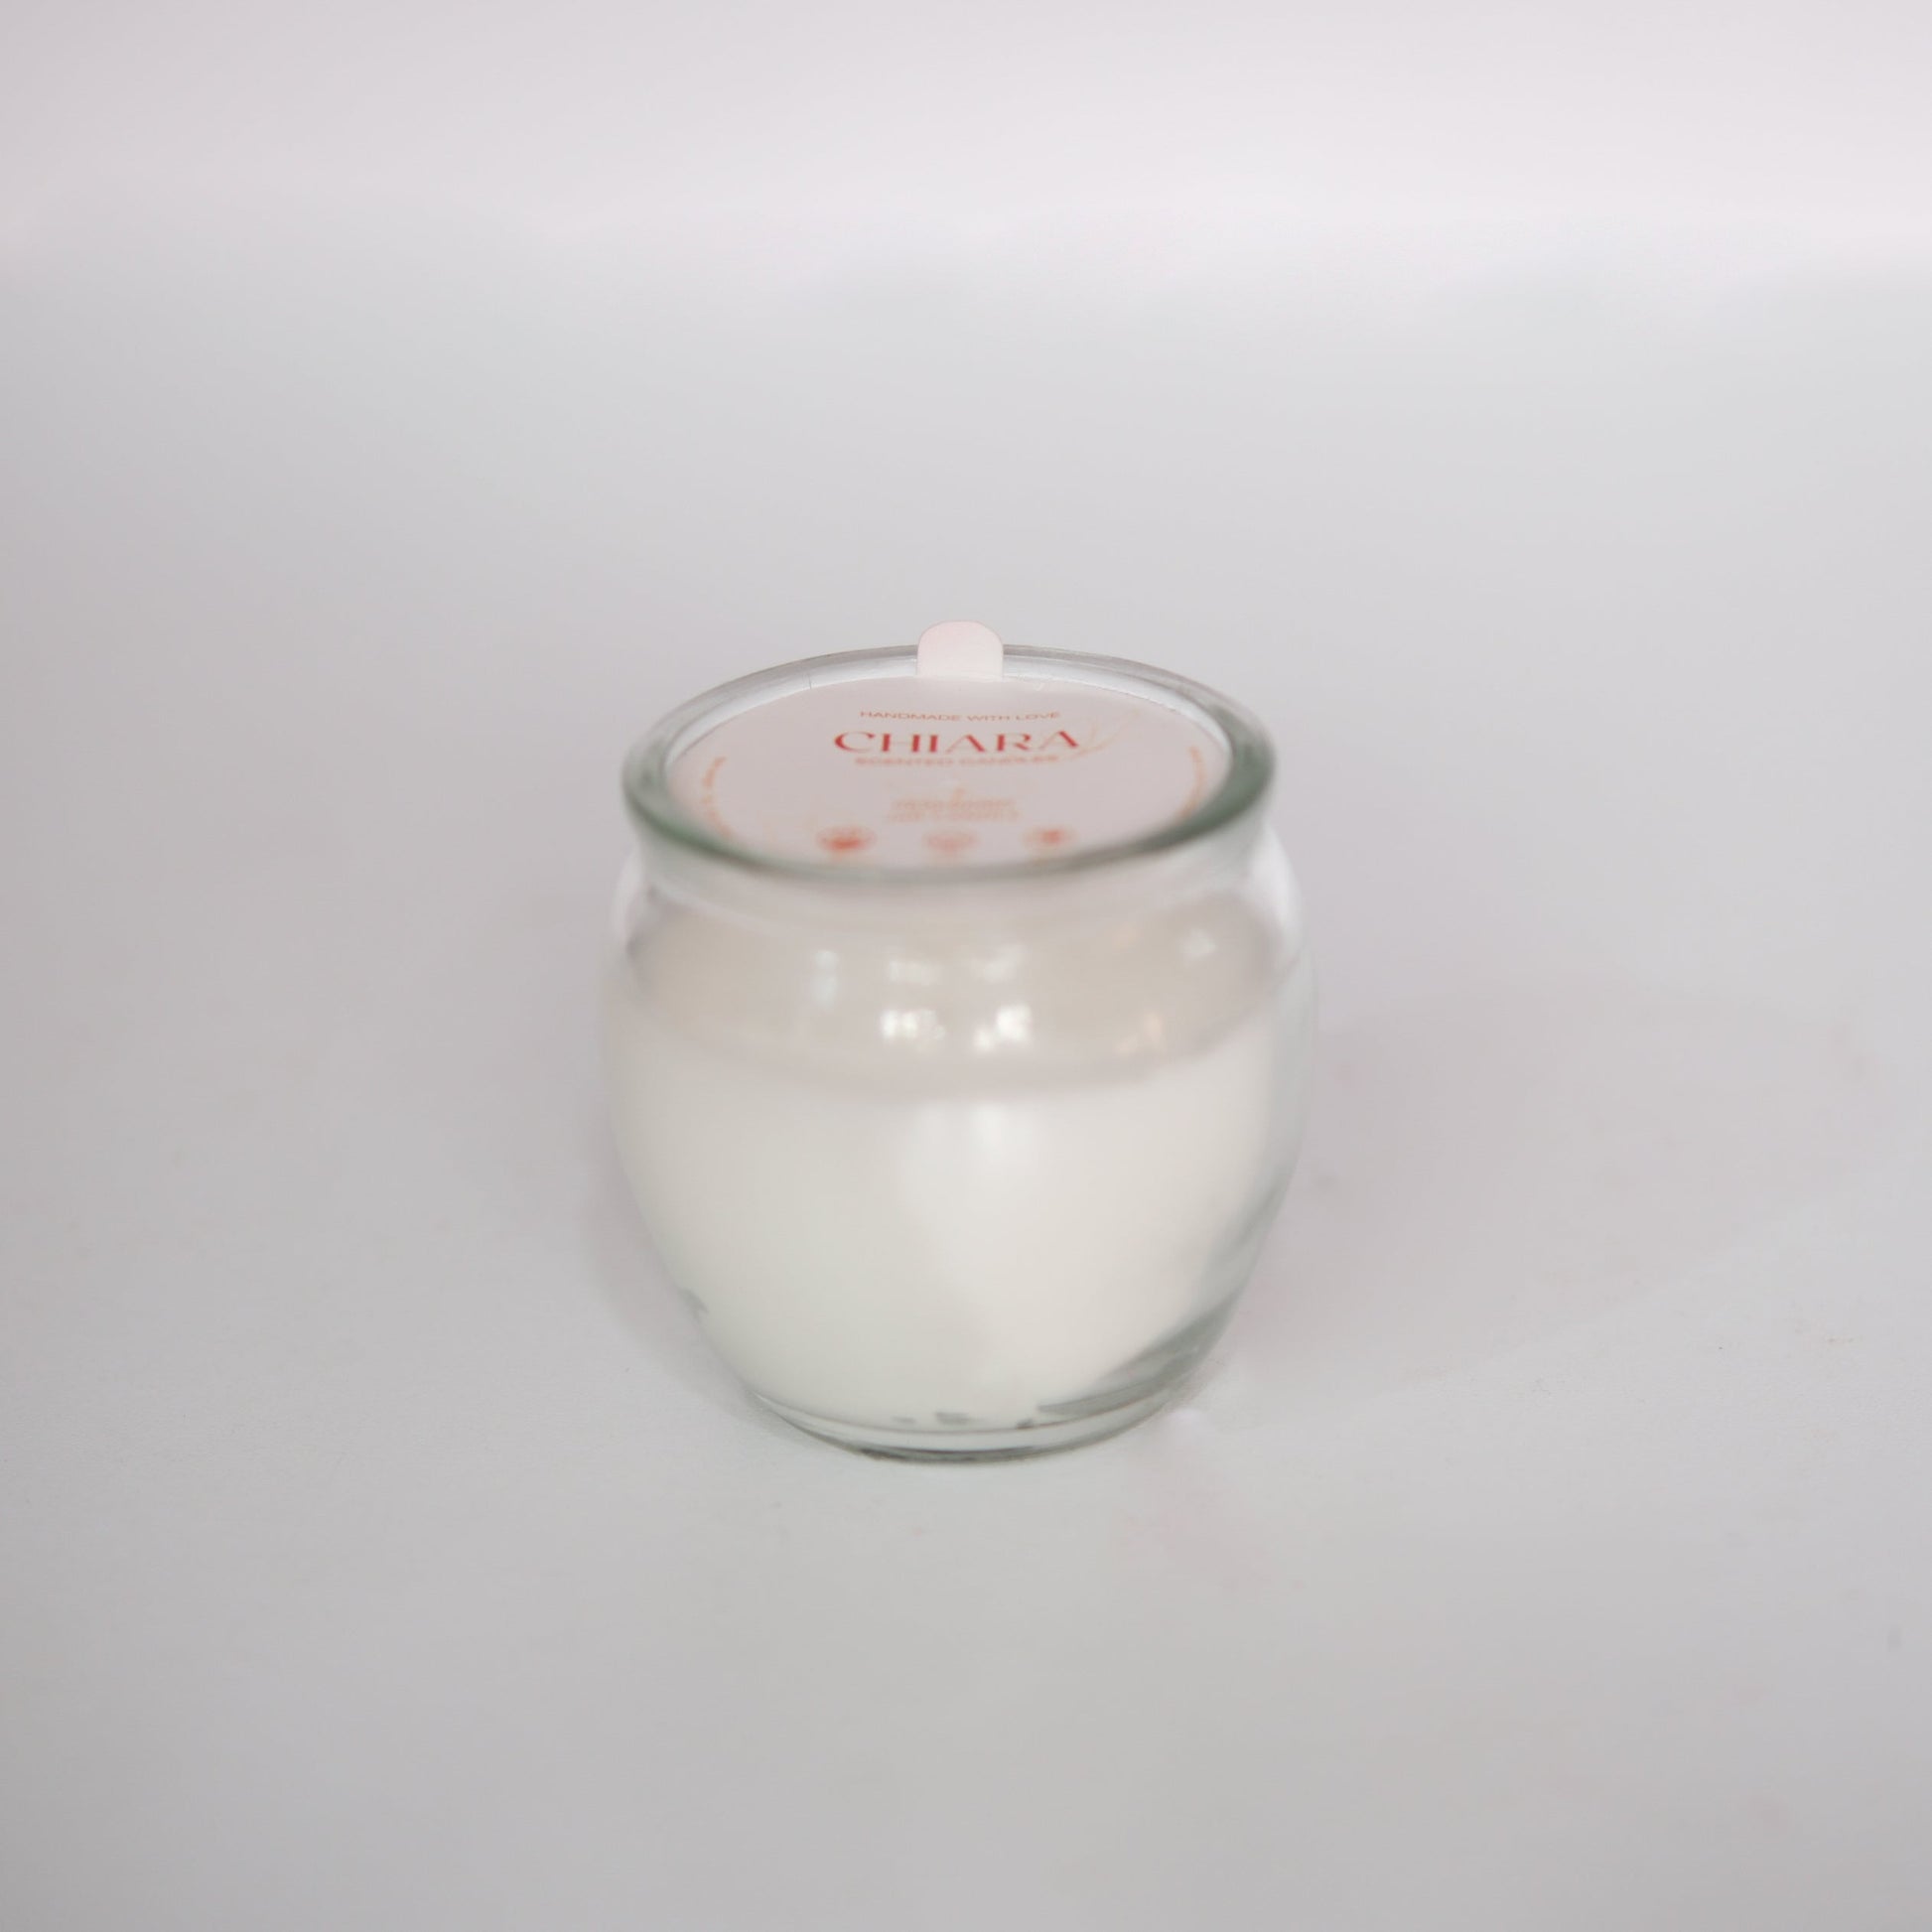 Perfumed jar candle CHIARA